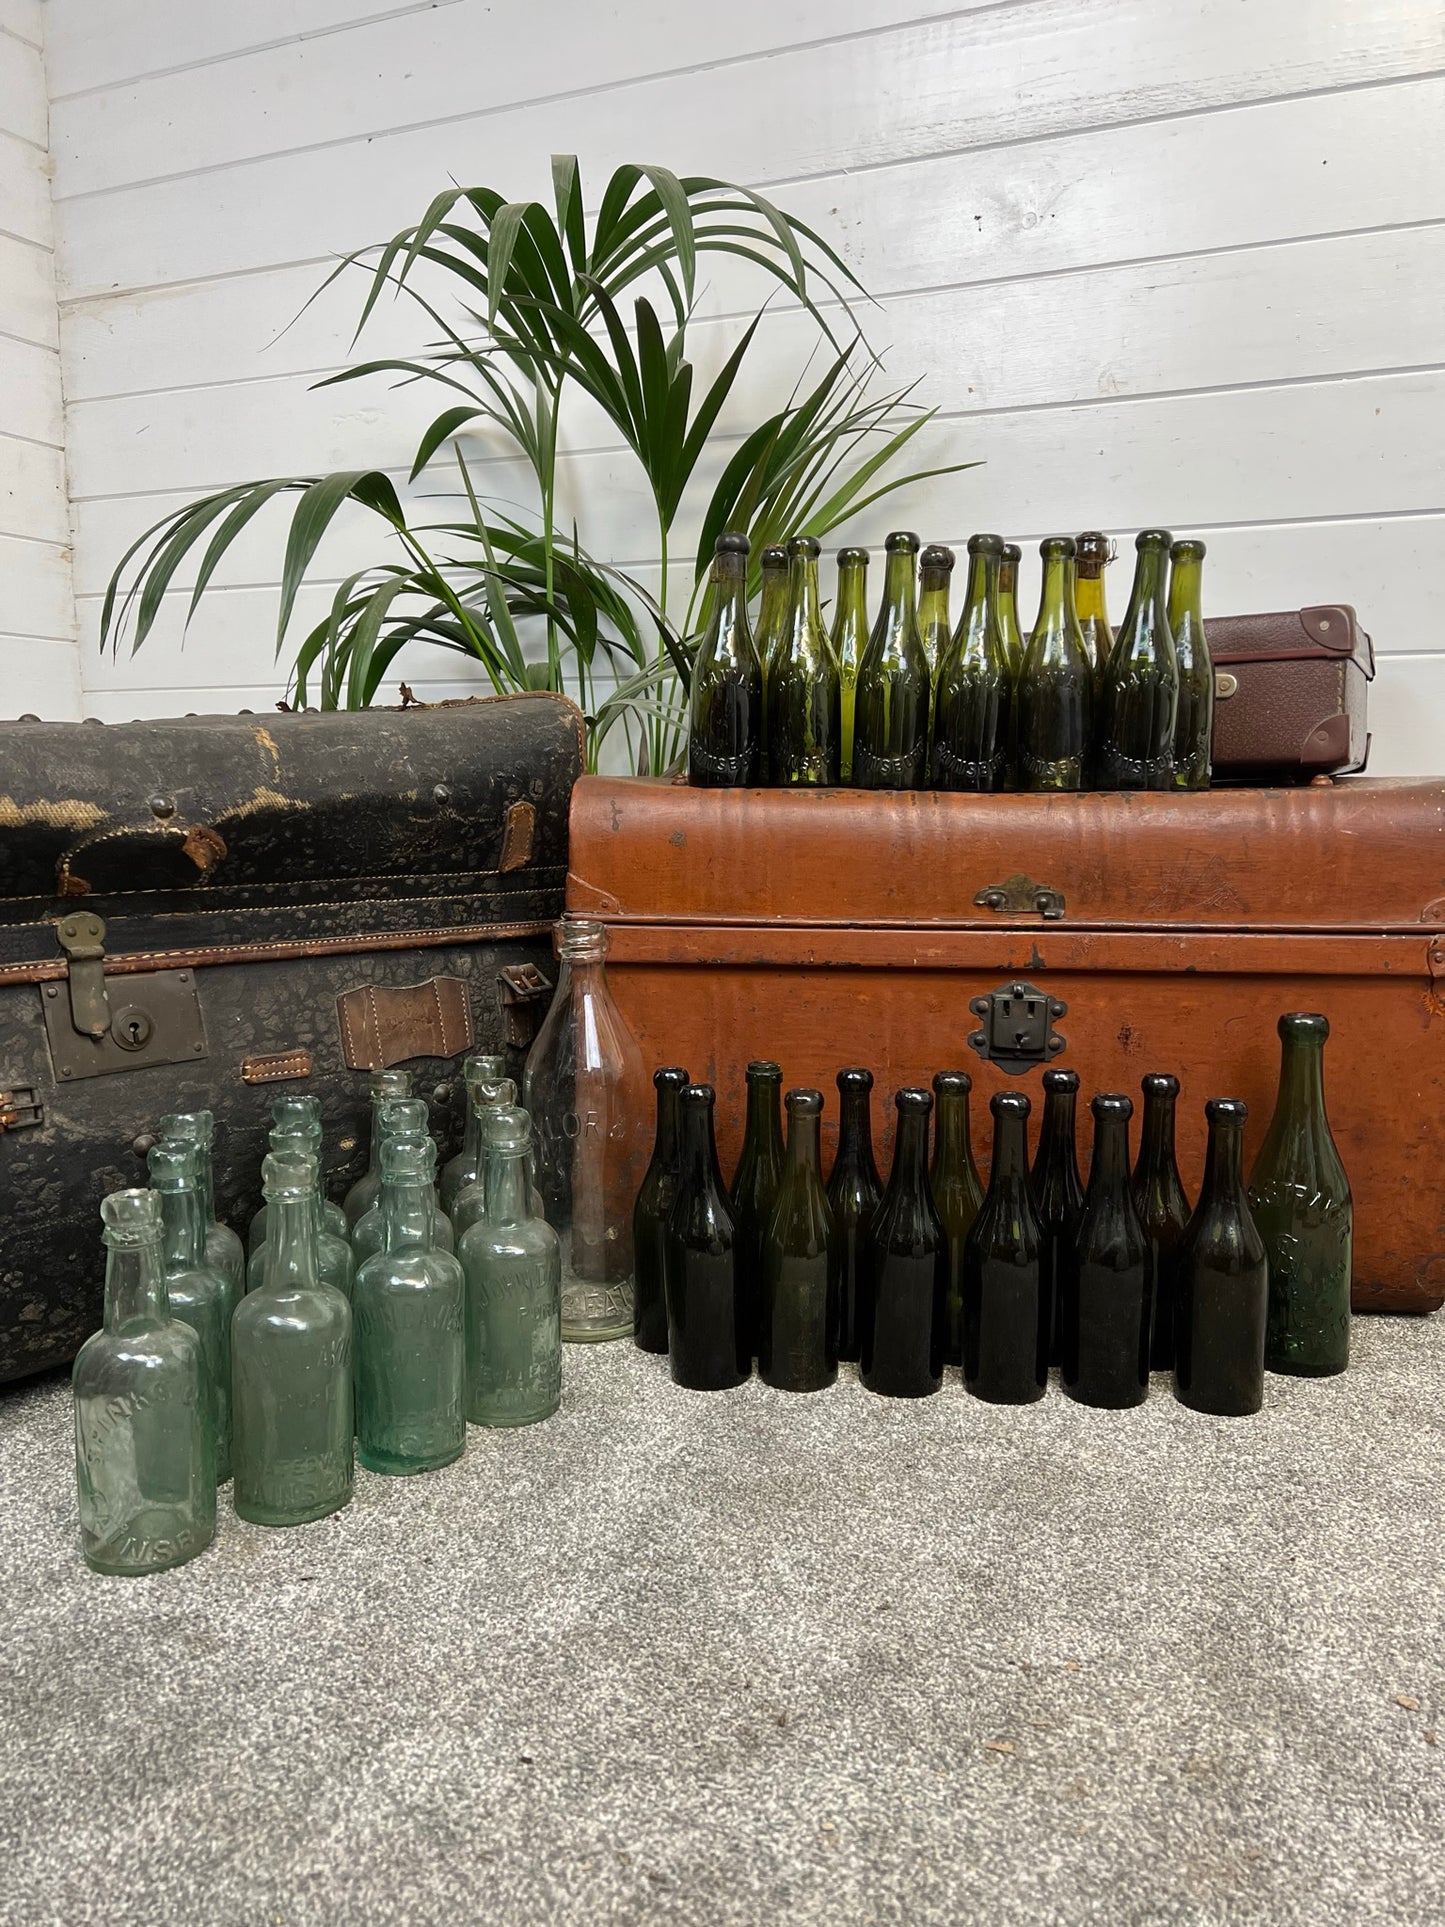 5x Vintage Green Glass Bottles "Davies Gainsboro" Decorative Codd Shelf Decor Wedding Decor Rustic Home Deco